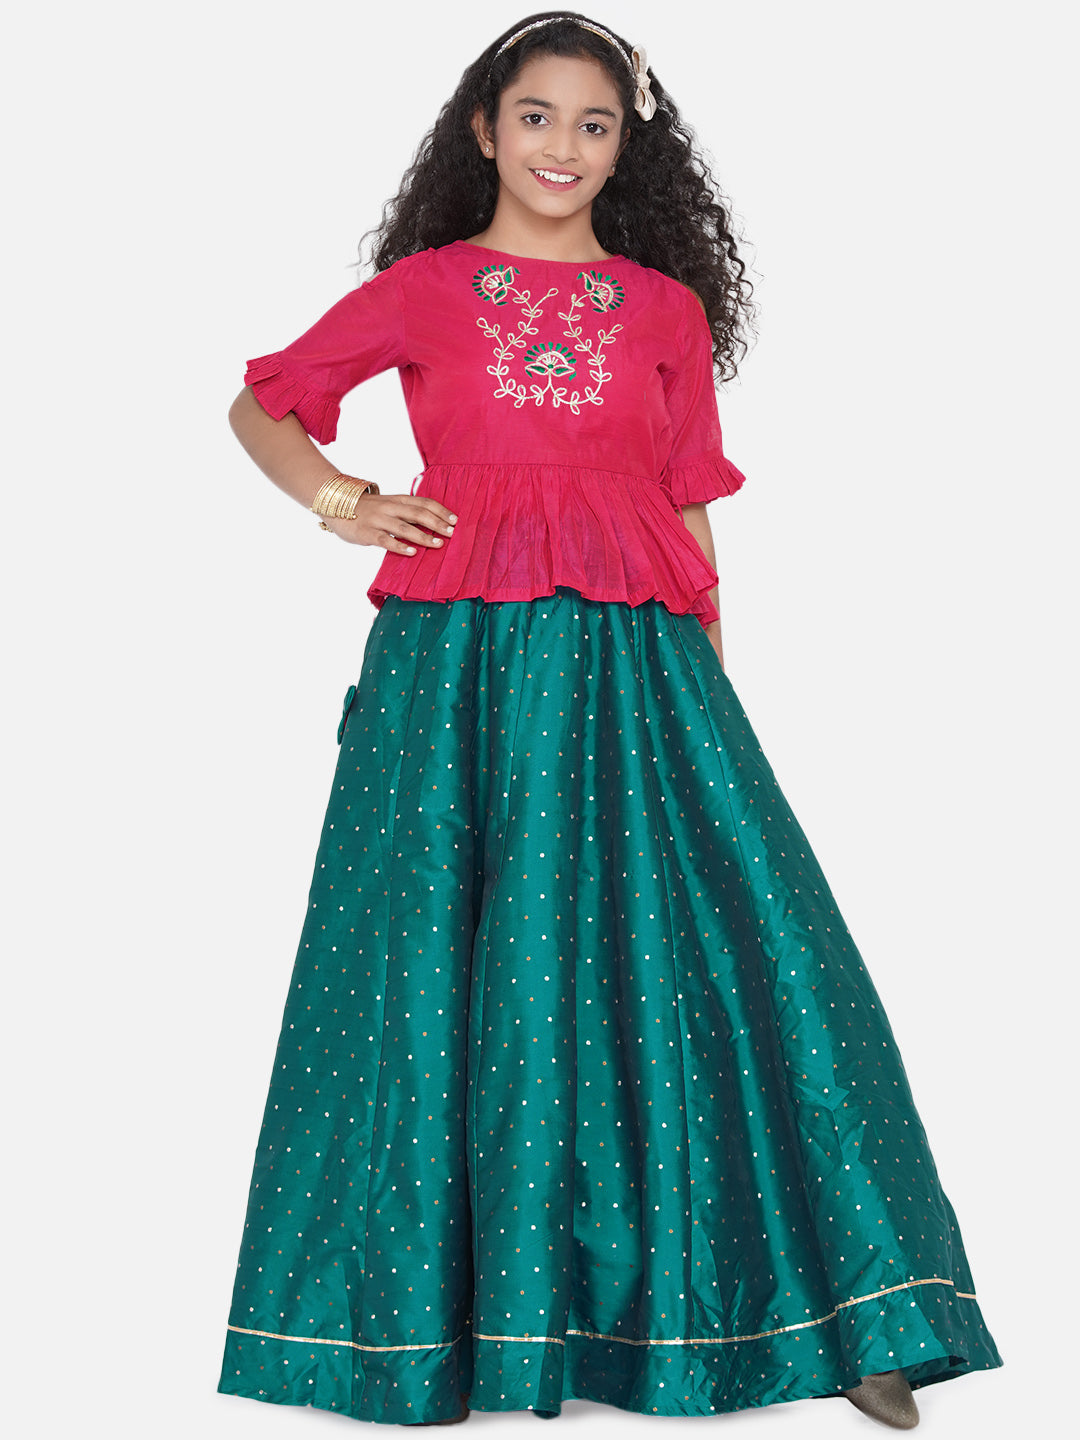 Bitiya By Bhama Girls Pink & Green Embroidered Choli Ready To Wear Lehenga